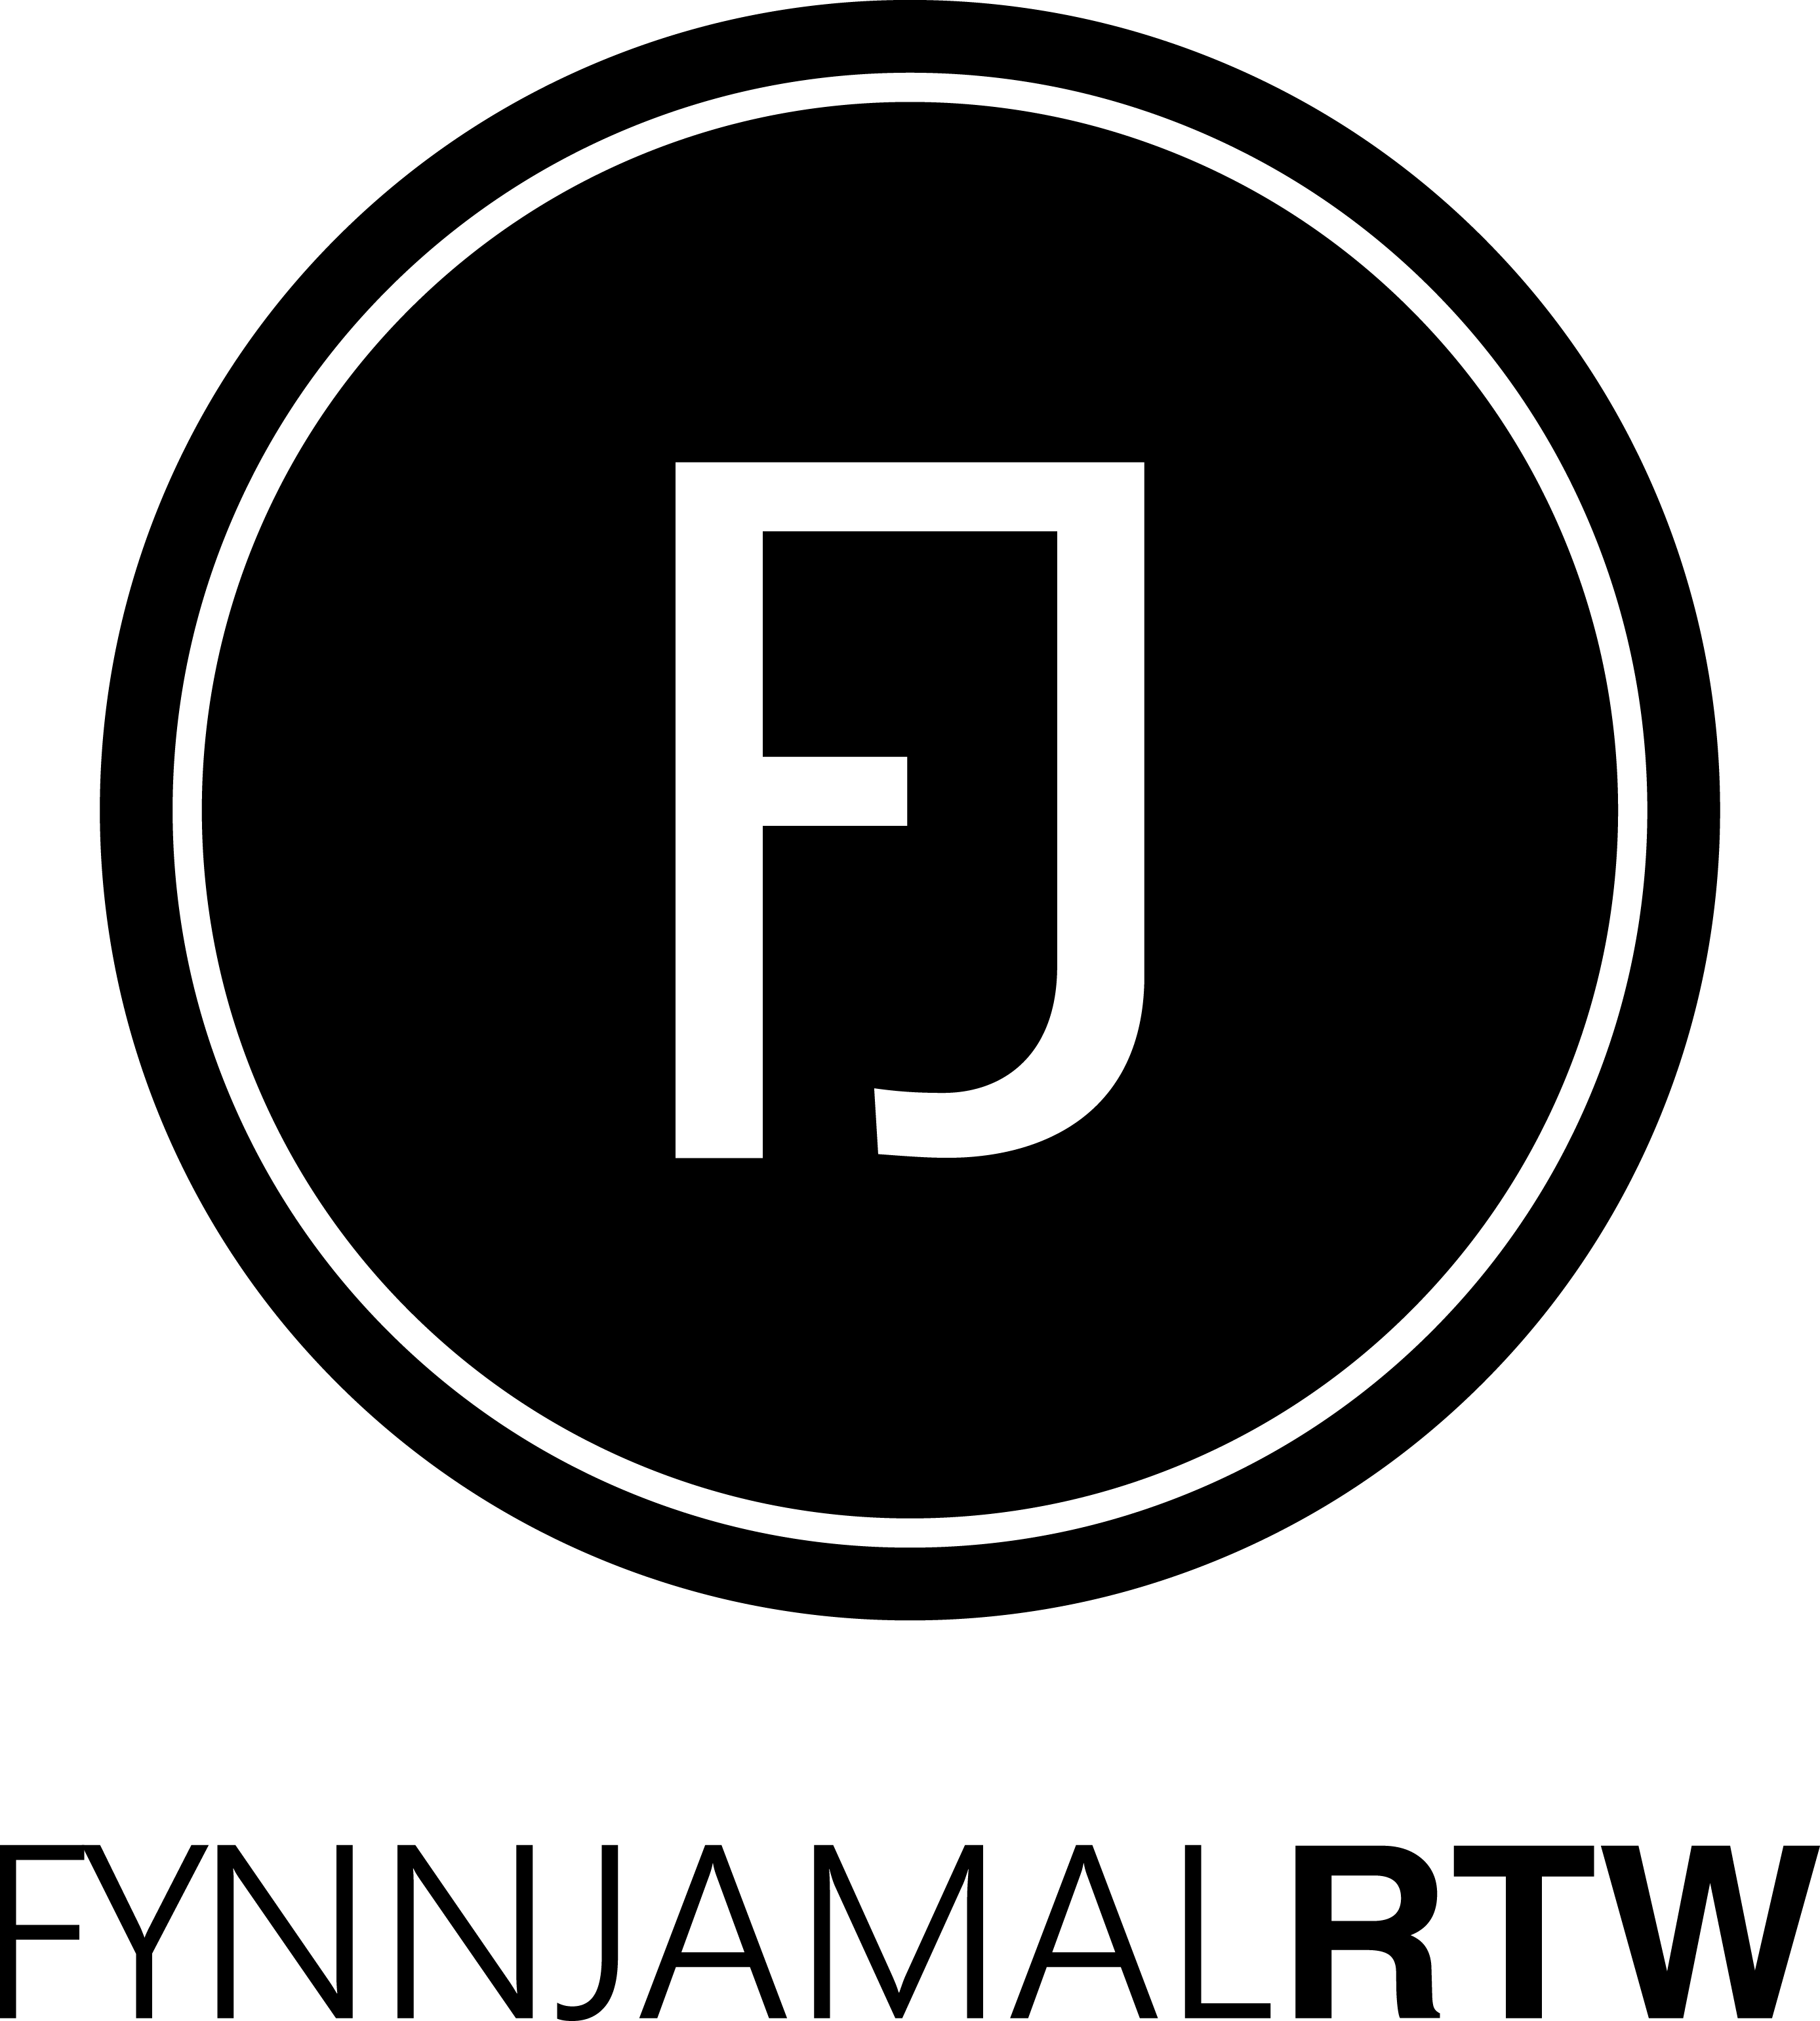 FJ Logo - FJ logo BLACK | FYNNJAMAL